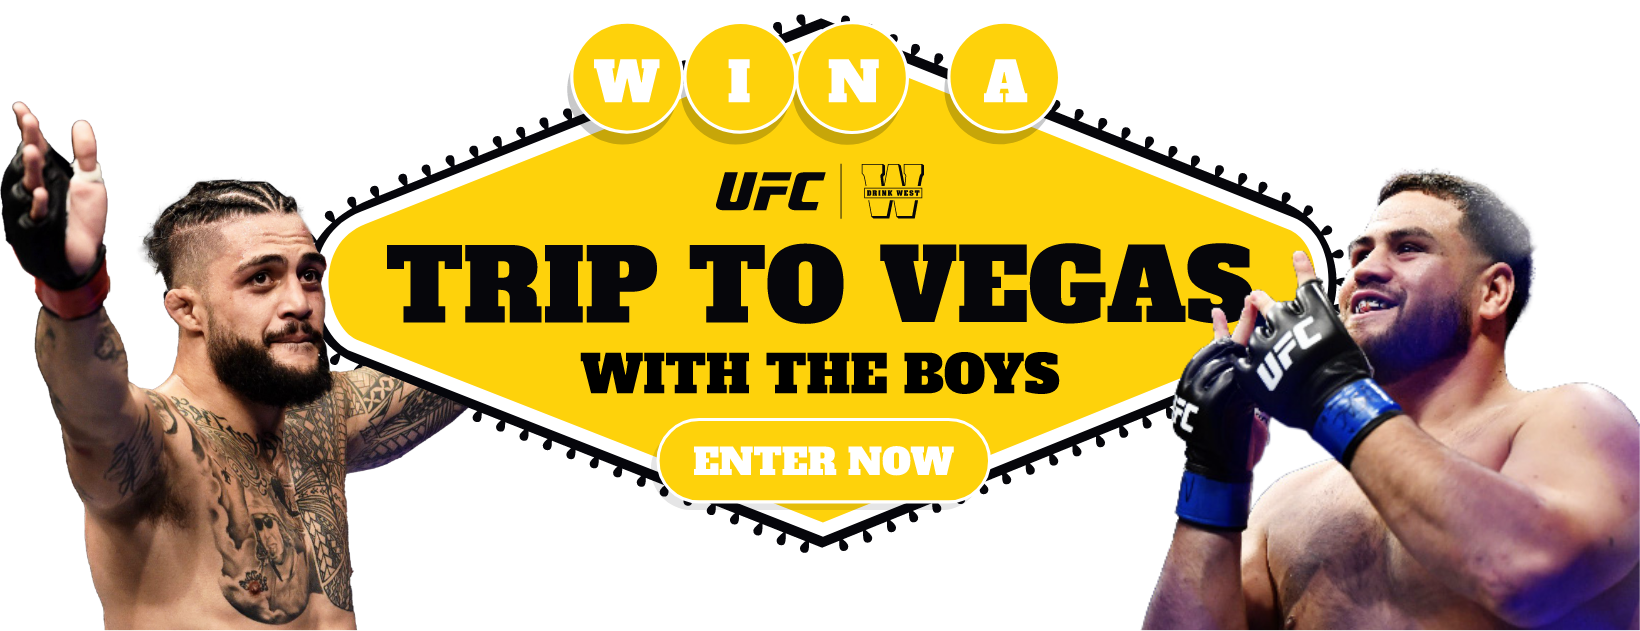 Win a UFC Fight Experience in Las Vegas Drink West